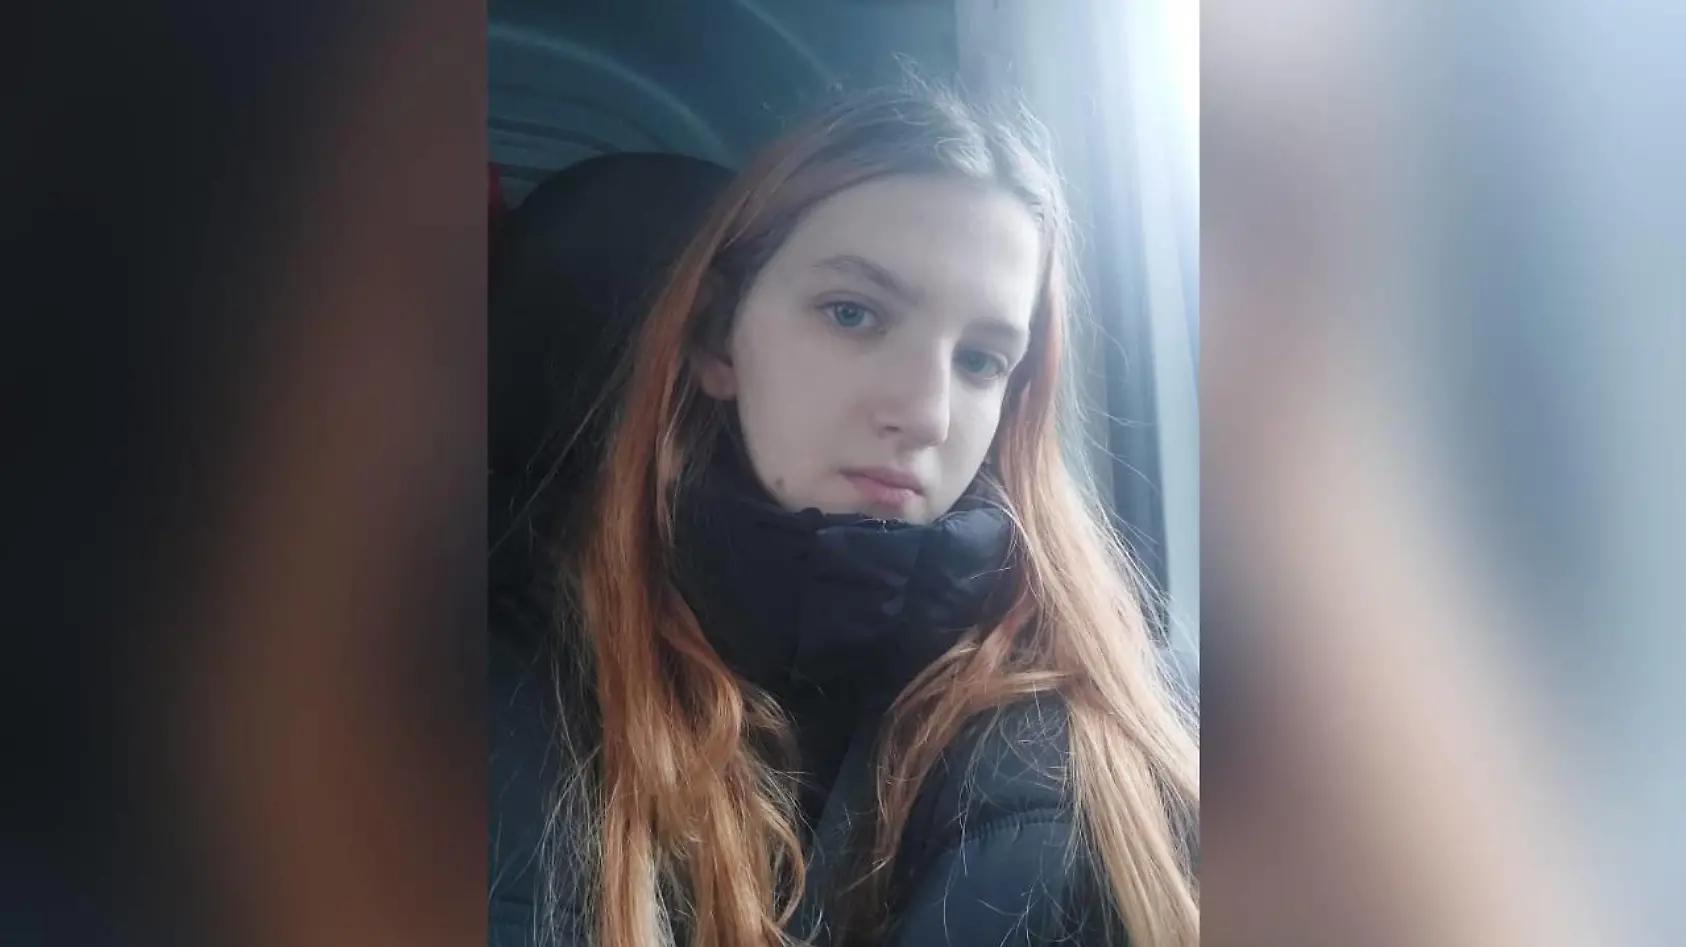 16-Jährige Charleen aus Kiel vermisst